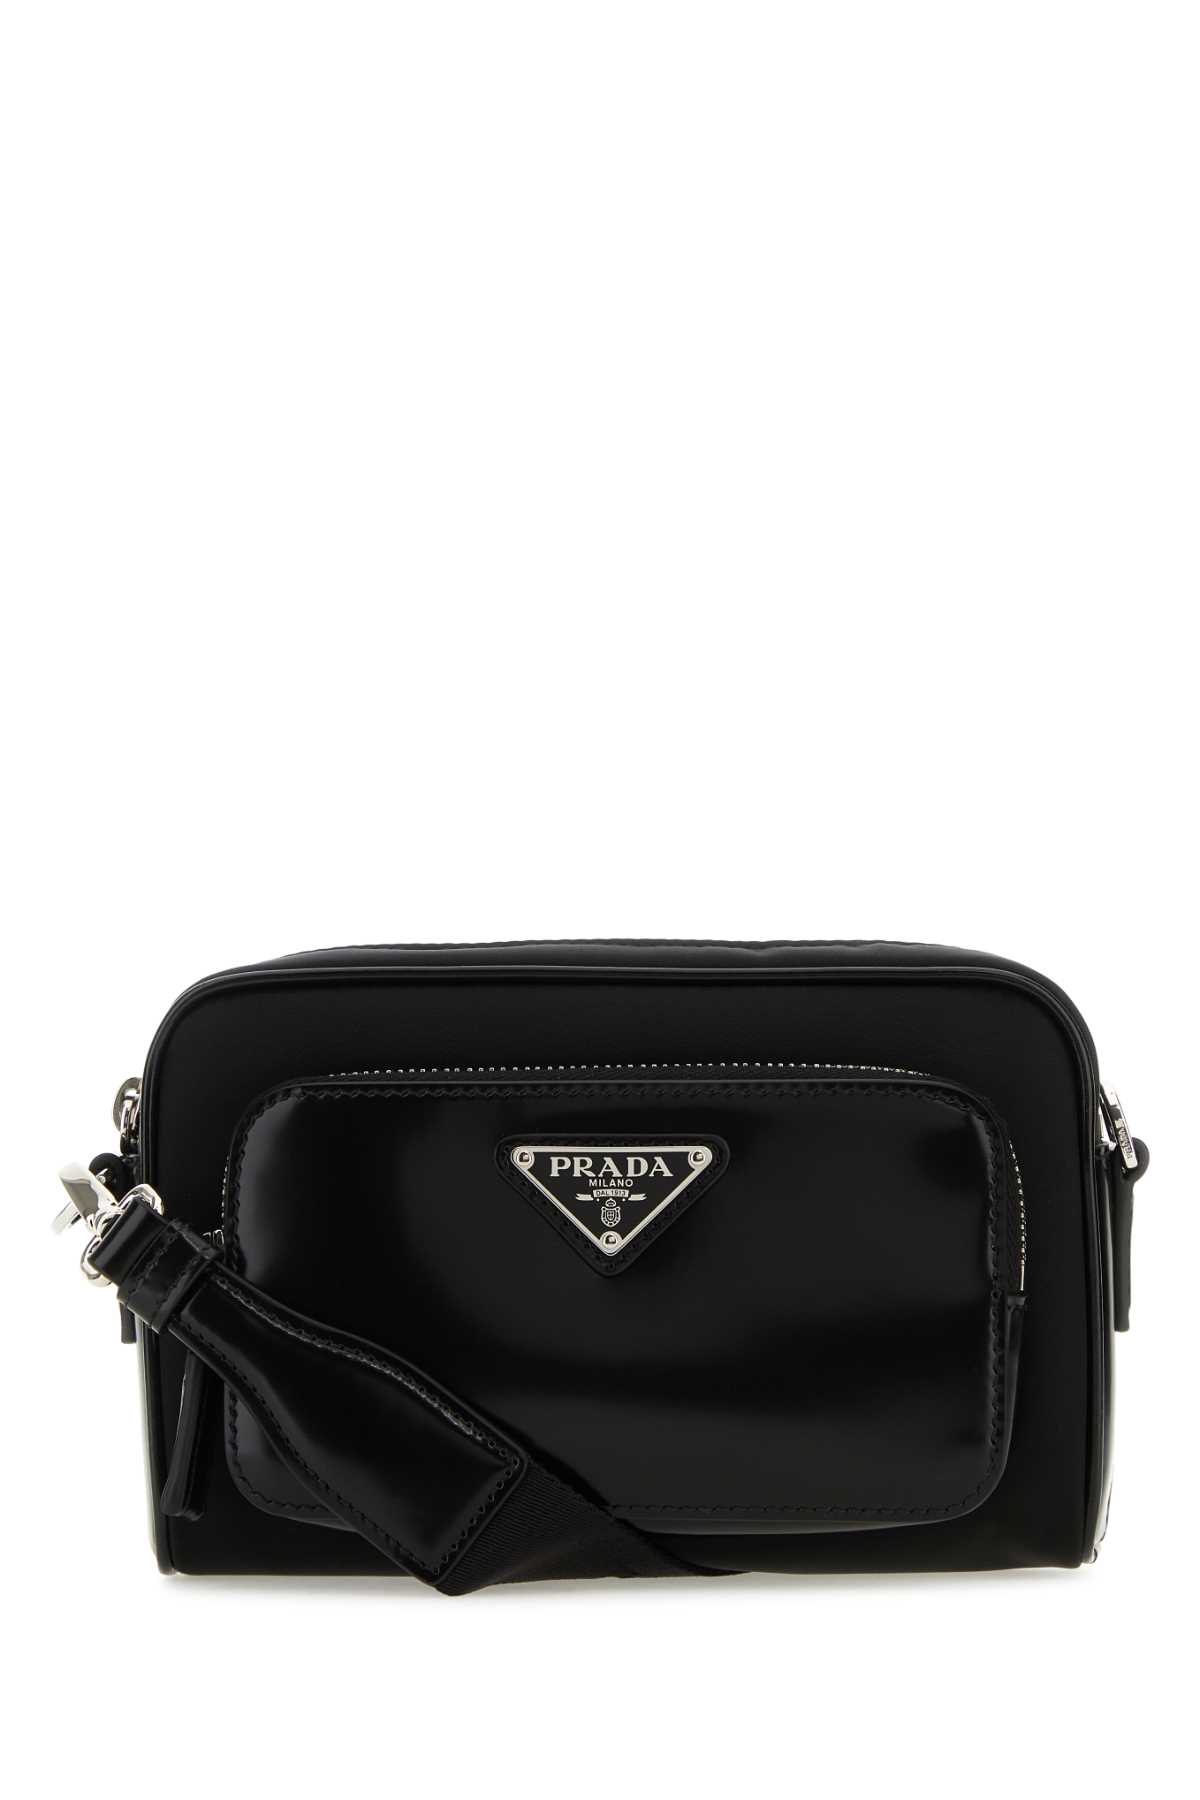 Prada Black Re-nylon And Leather Crossbody Bag